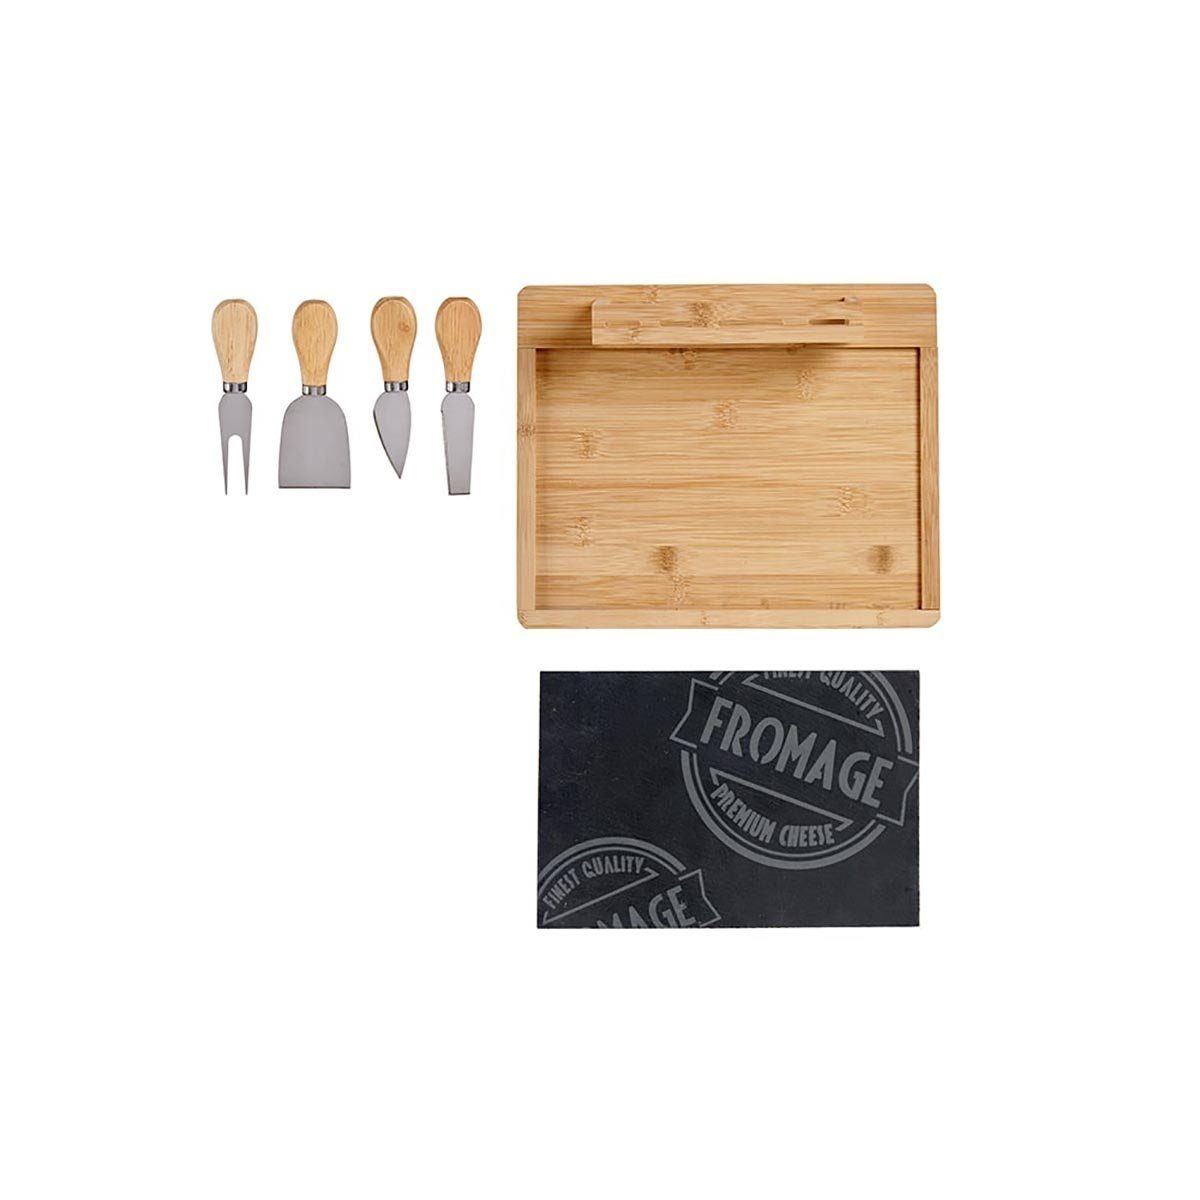 Bamboo Probierset Home Kitchen Aromaplanke Board 5-tlg. DOTMALL Cheeseboard